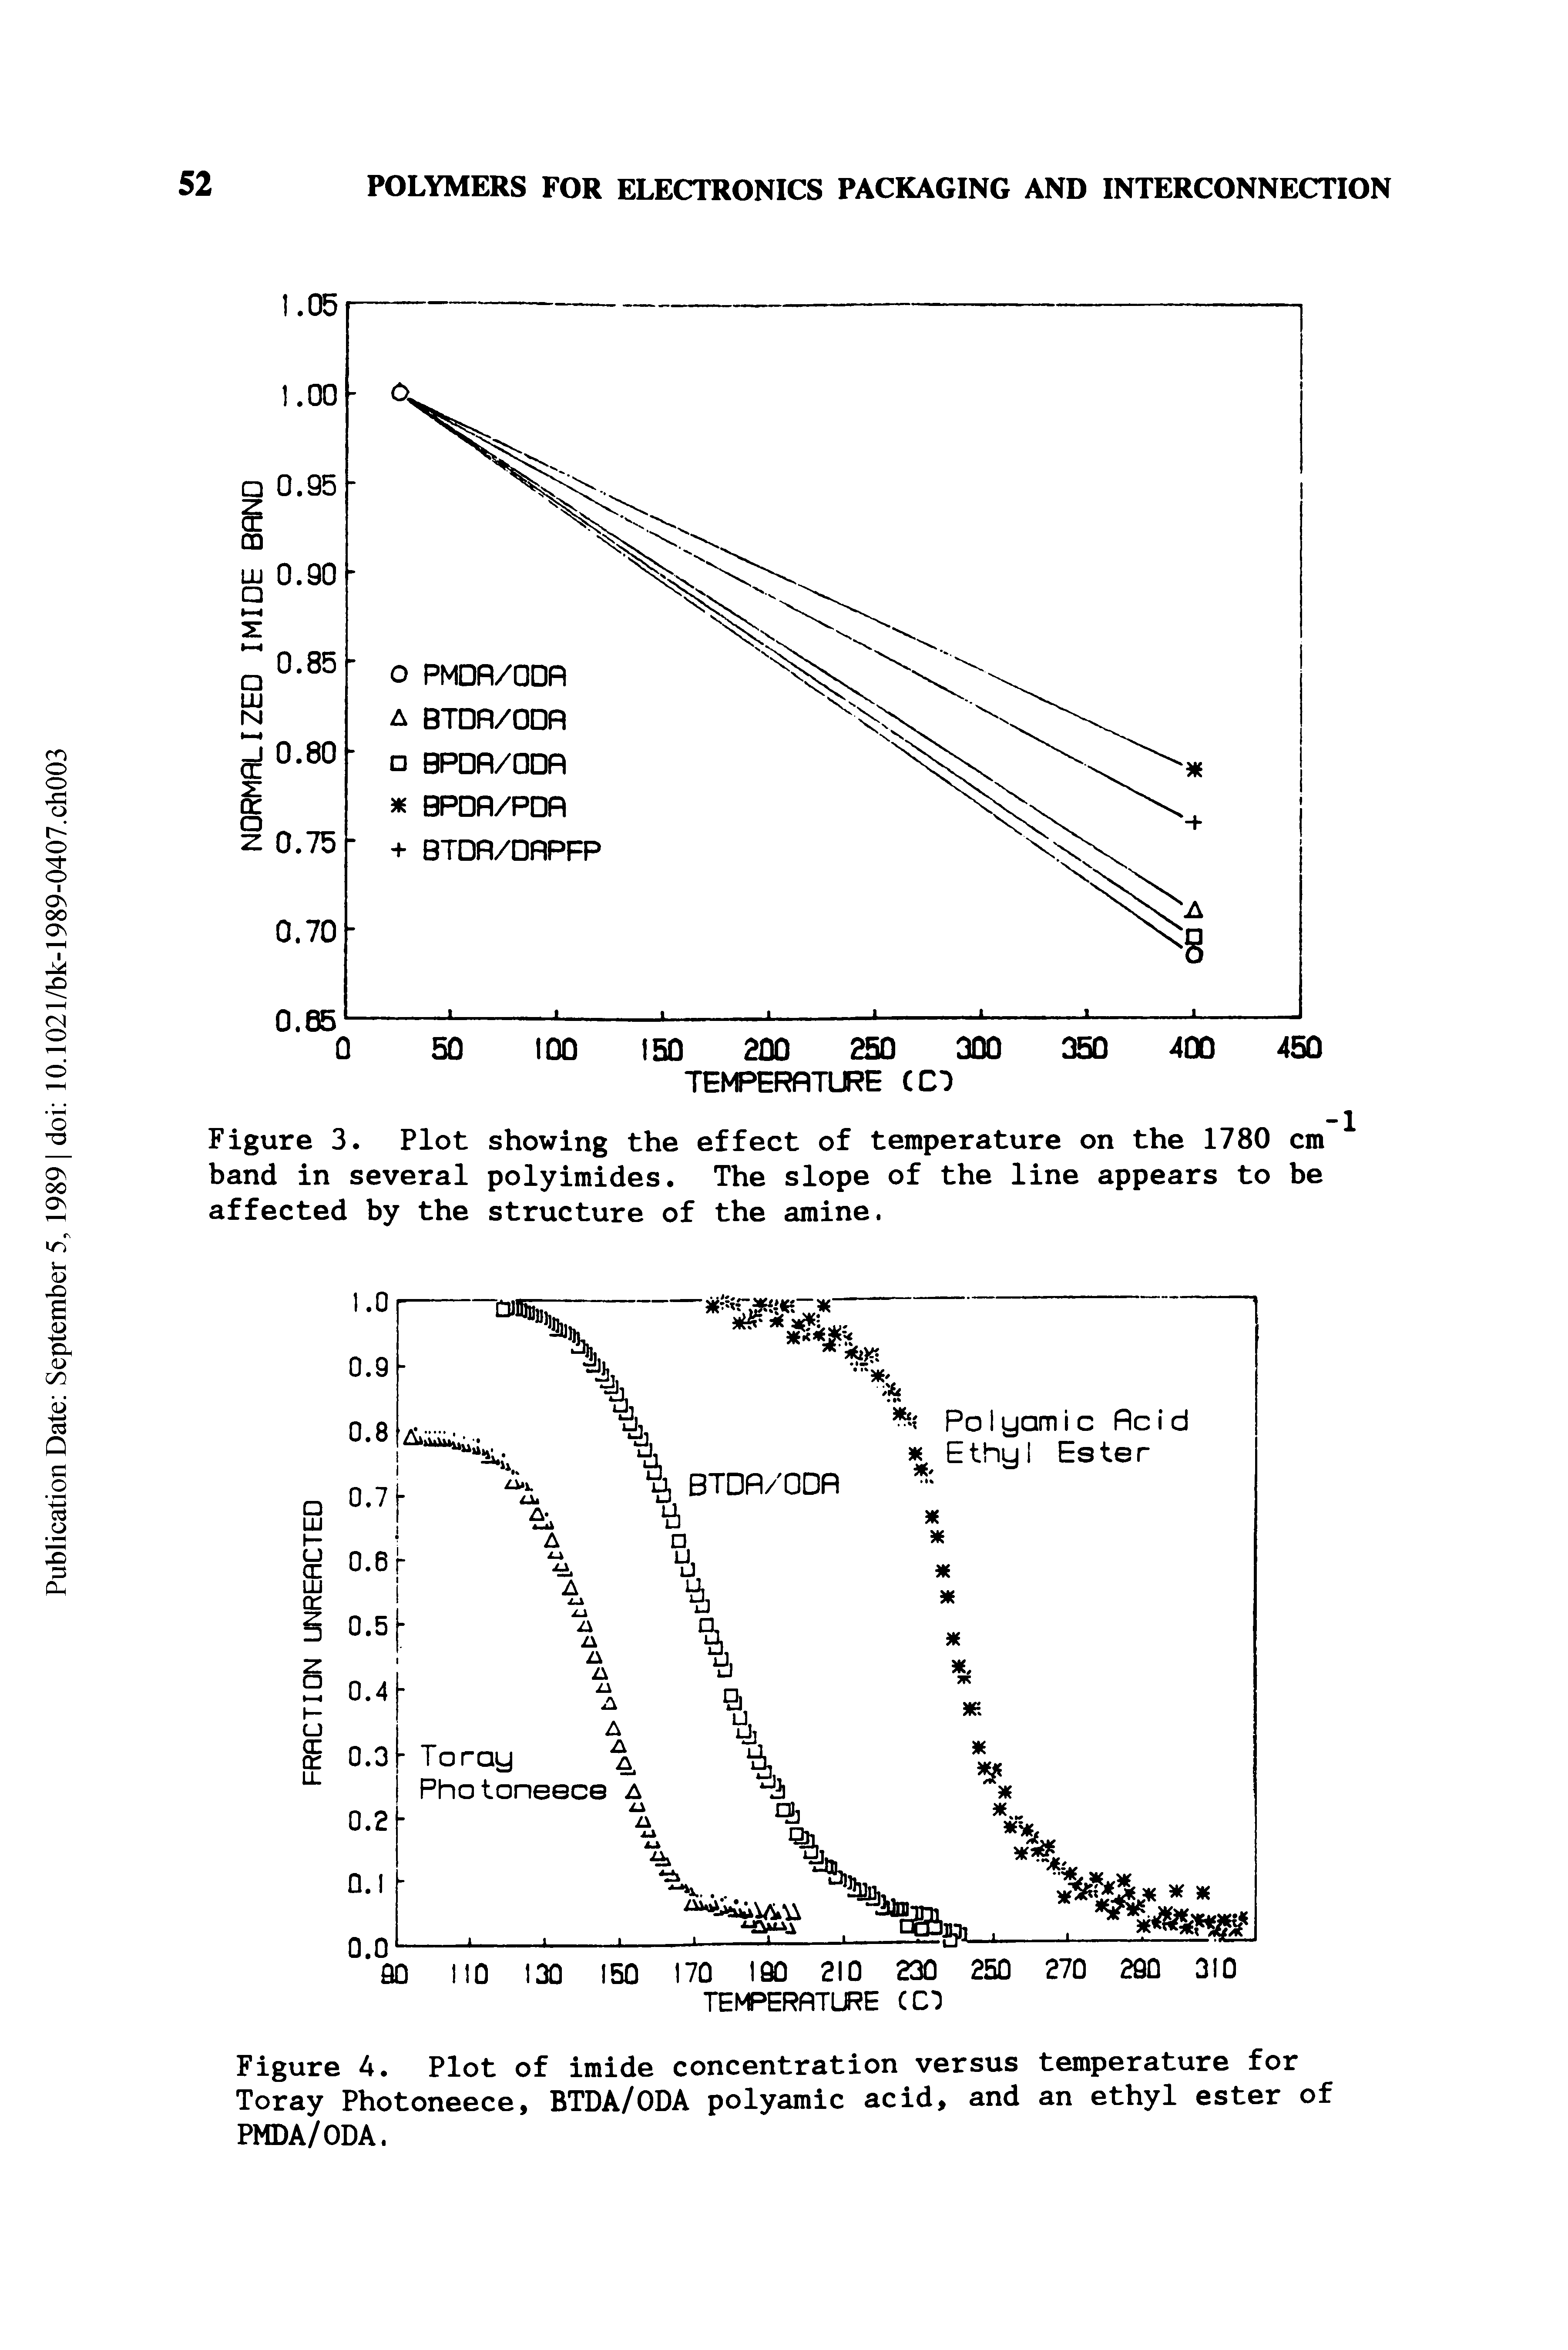 Figure 4. Plot of imide concentration versus temperature for Toray Photoneece, BTDA/ODA polyamic acid, and an ethyl ester of PMDA/ODA.